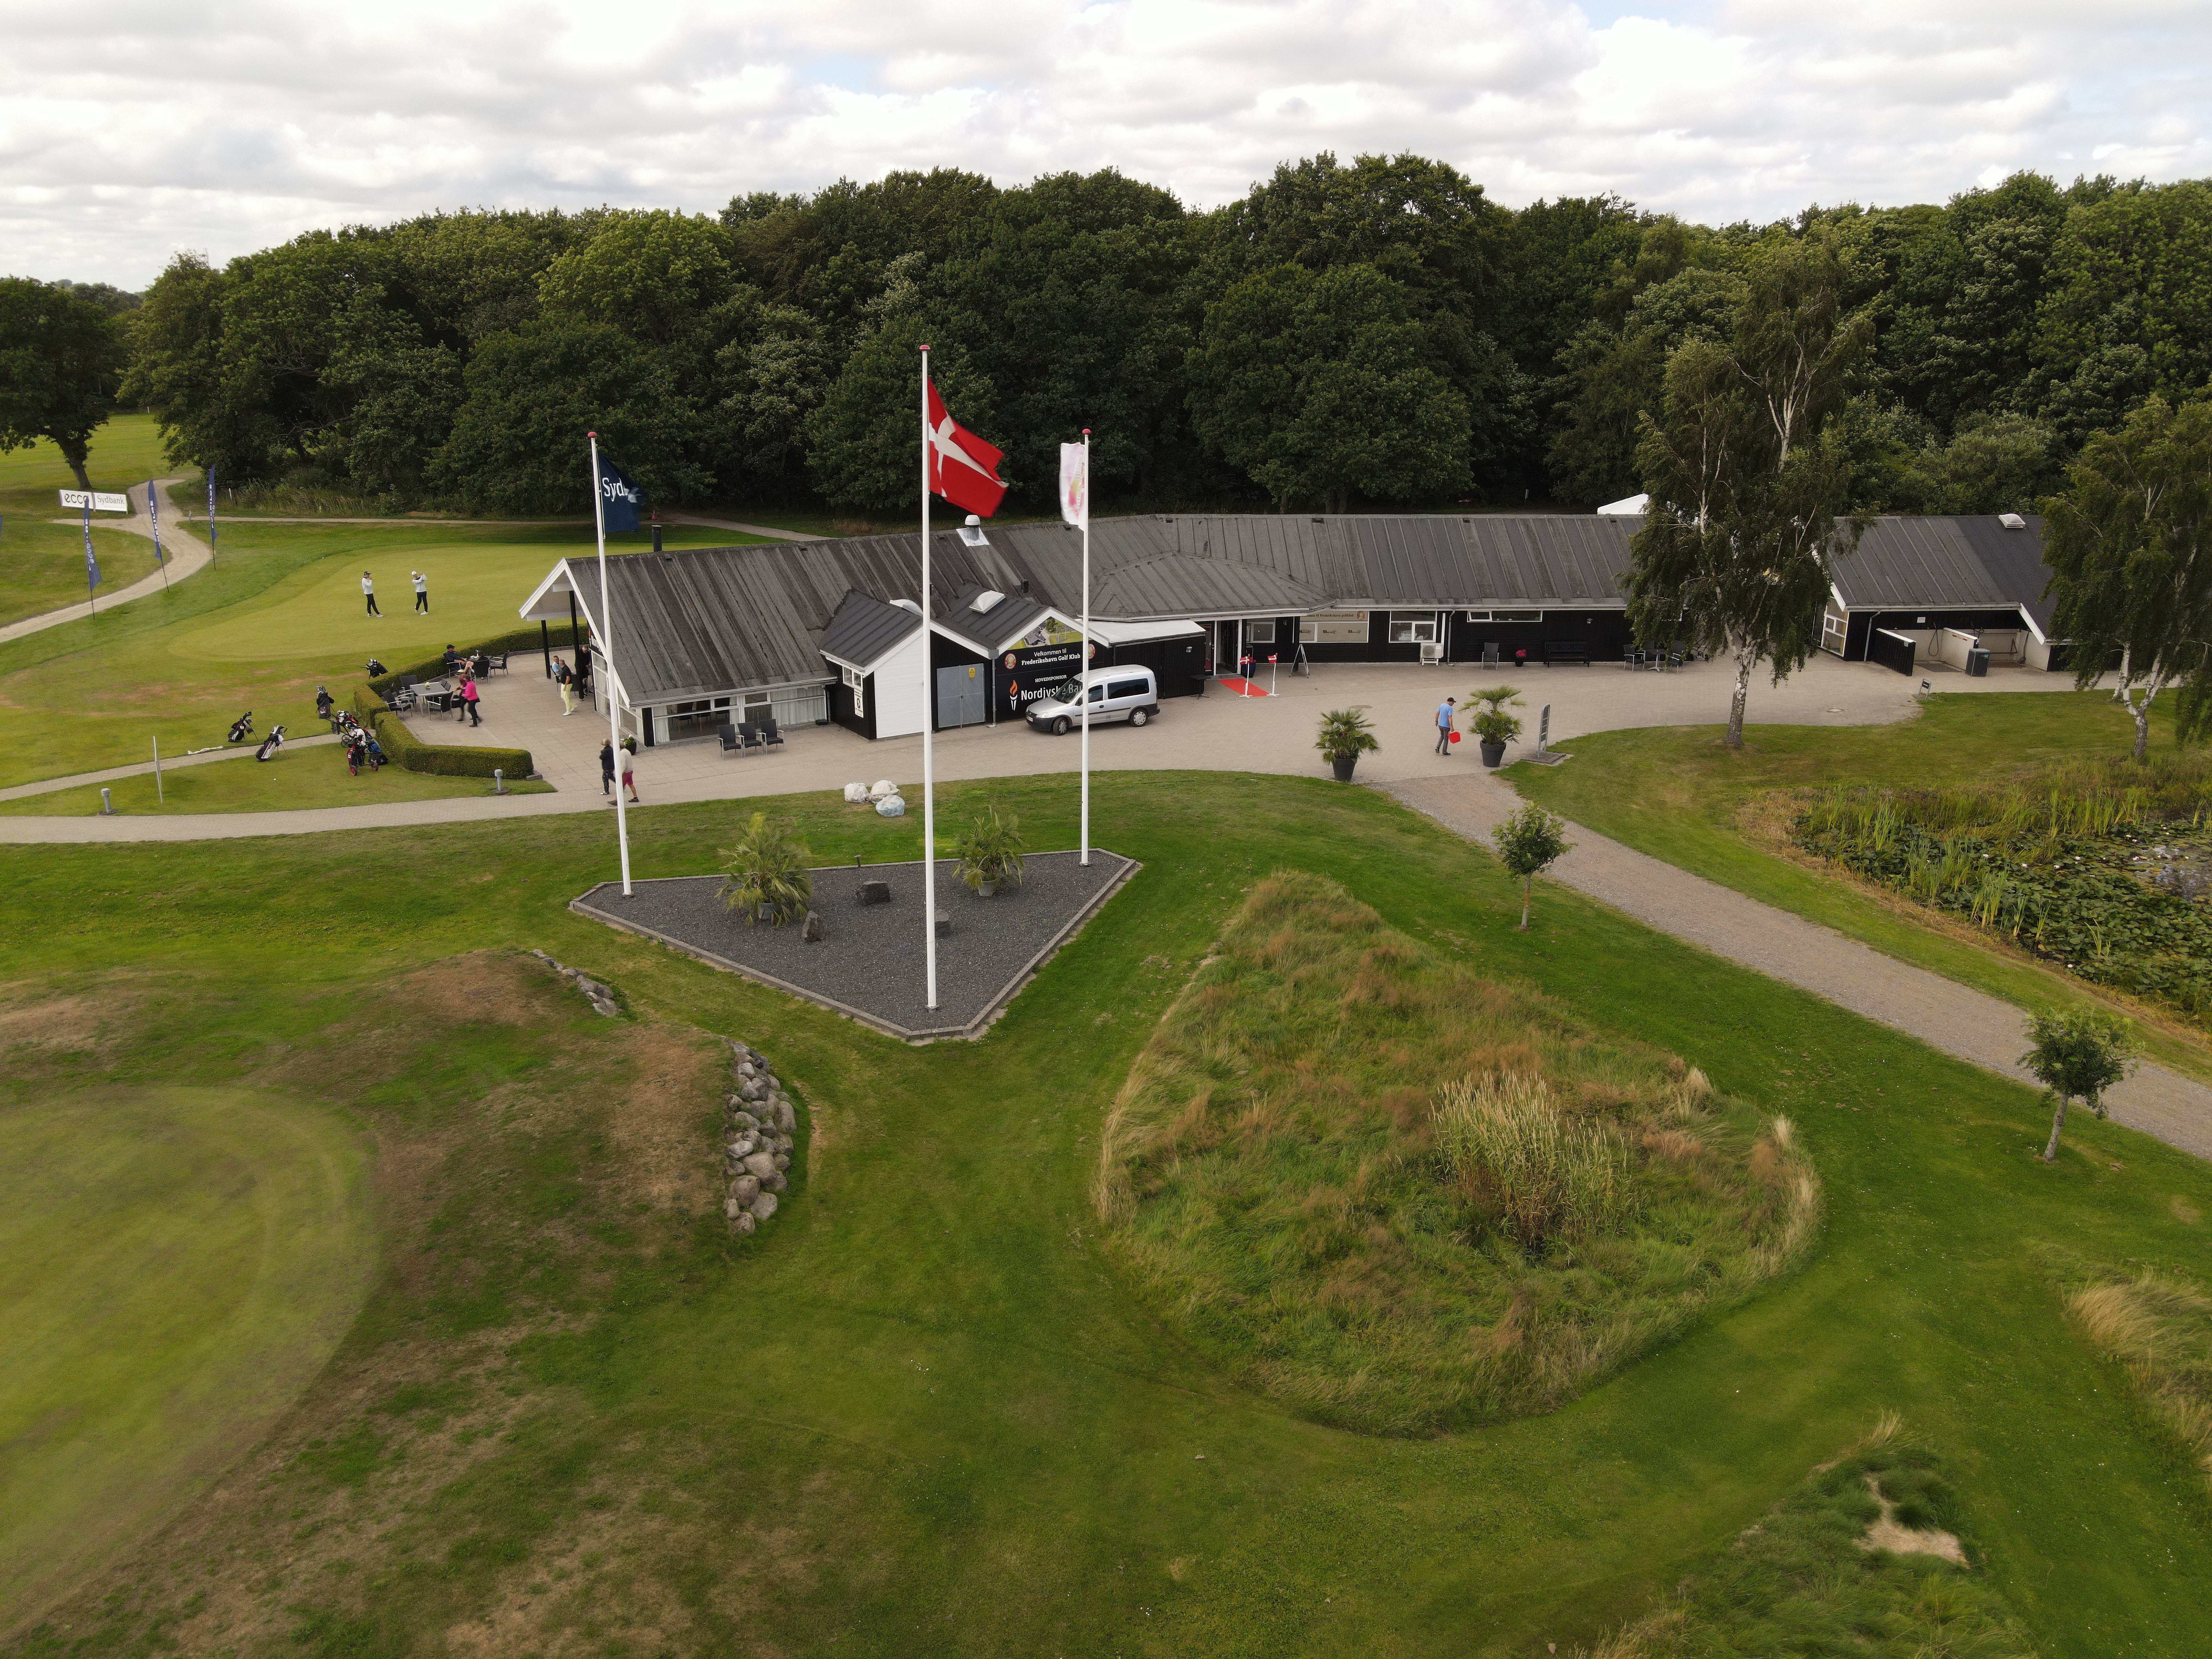 Katastrofe grafisk Indbildsk Golf-scoop: Challenge Touren kommer til Frederikshavn i august 2022 | TV2  Nord